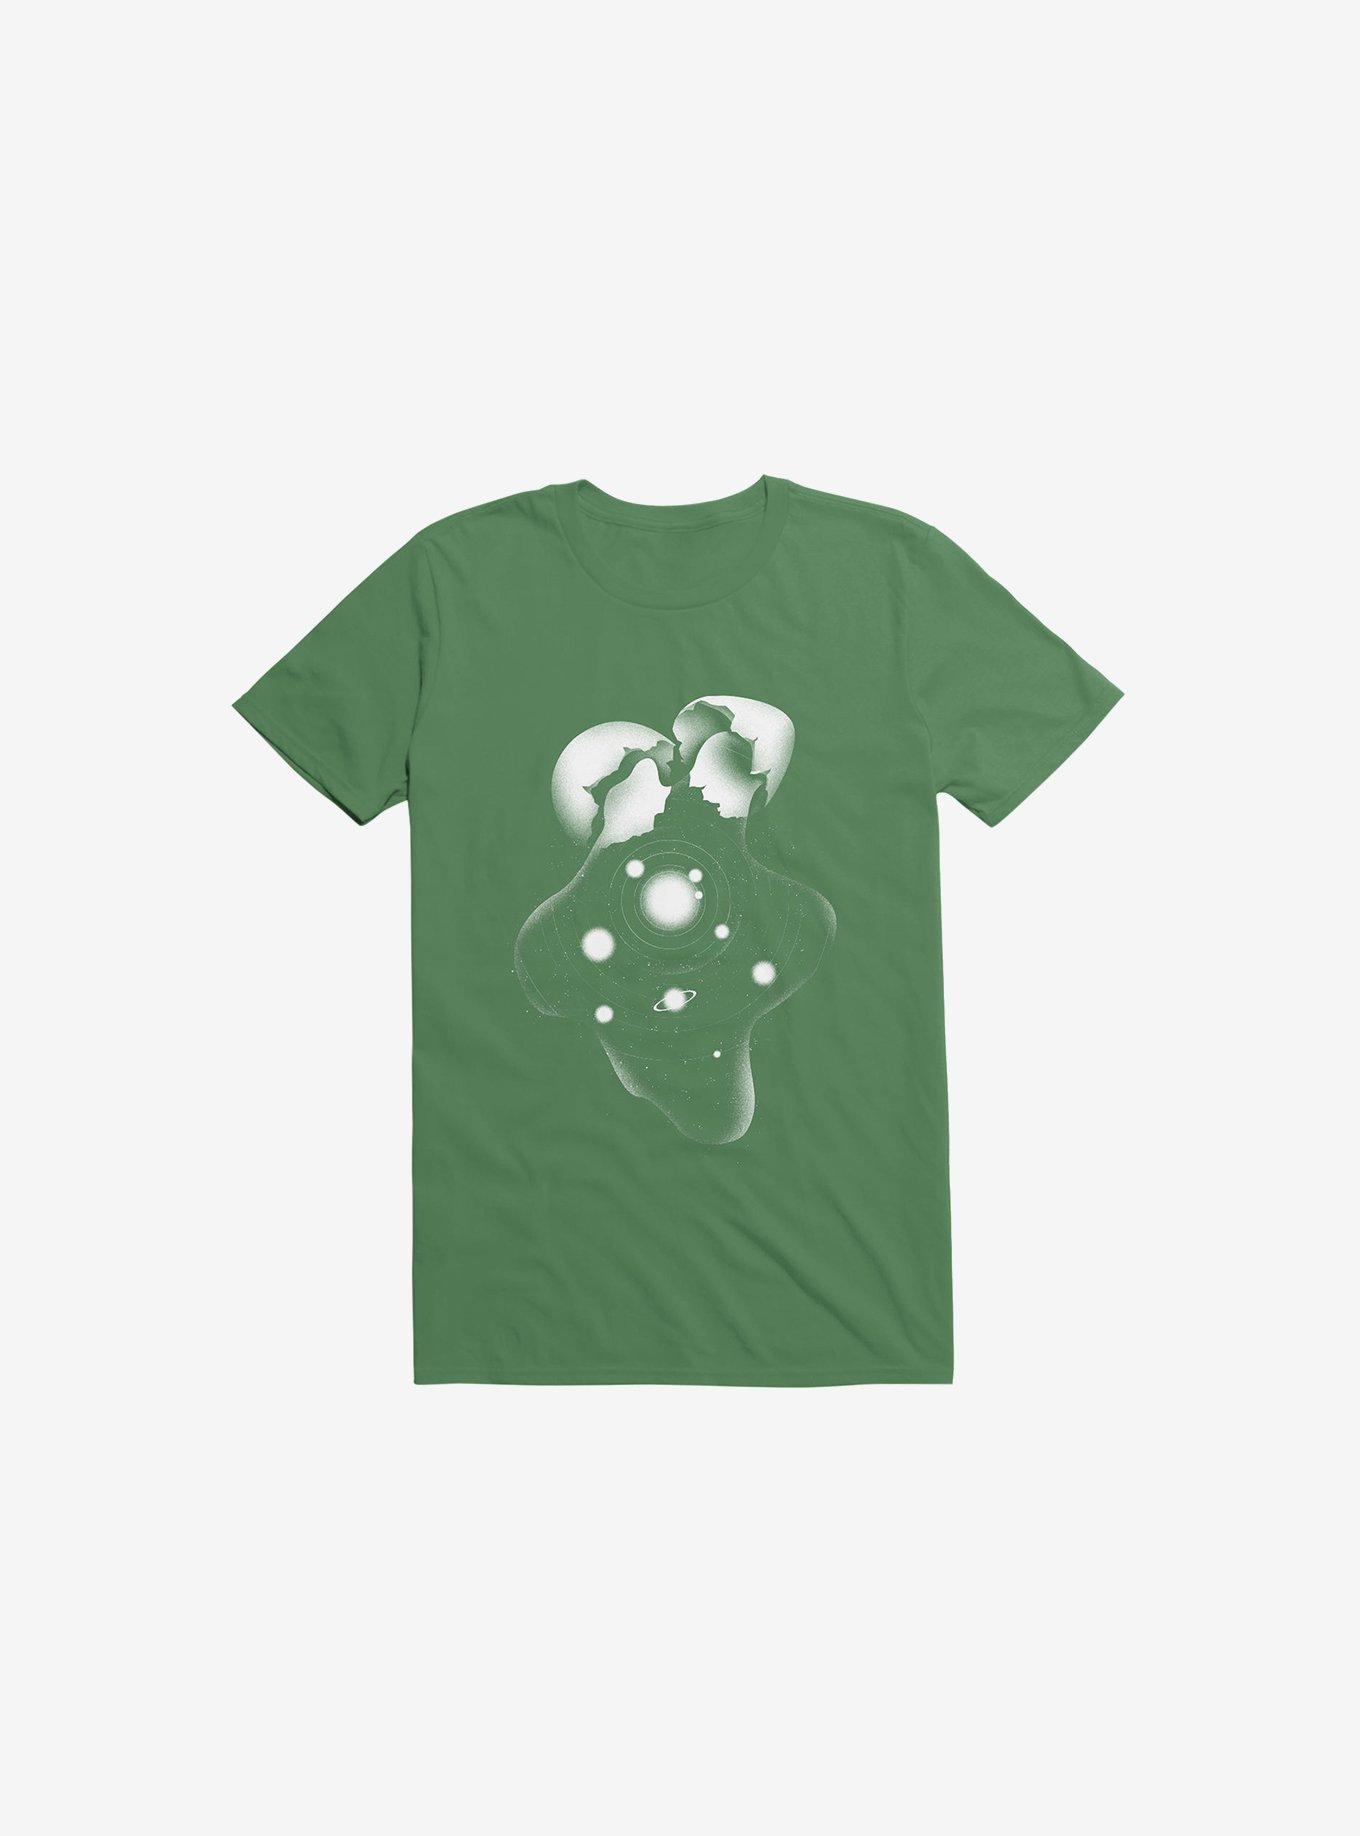 Cosmic Egg Shell Kelly Green T-Shirt, KELLY GREEN, hi-res